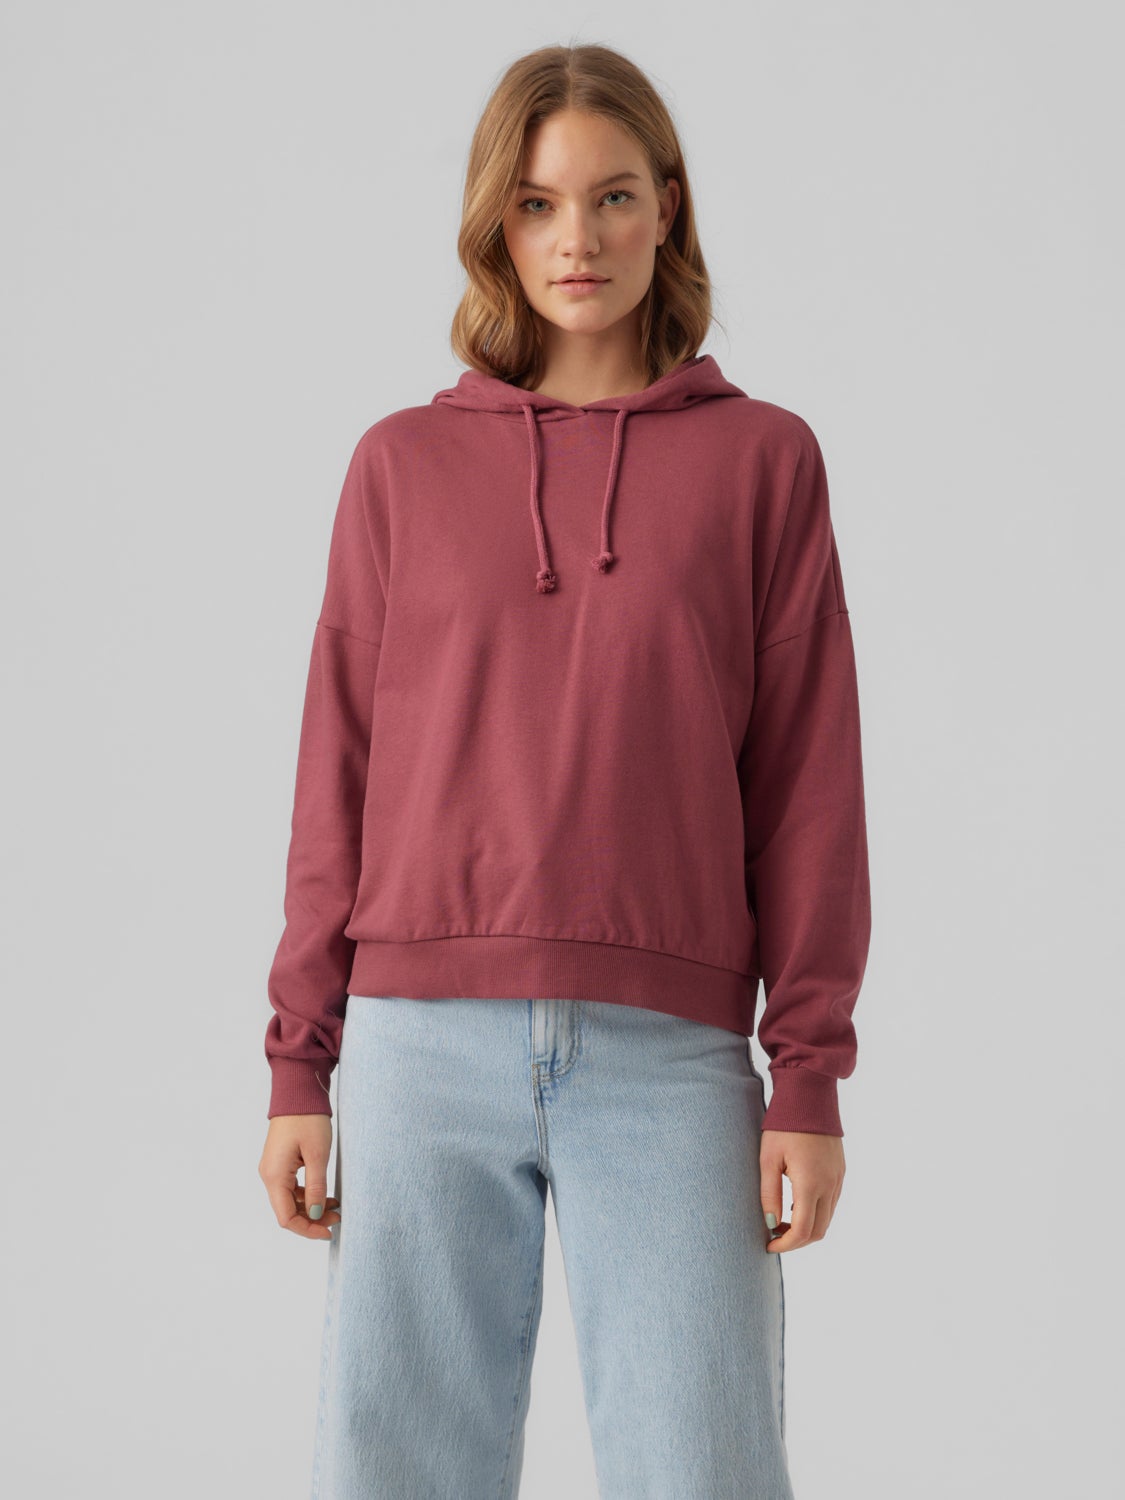 Rabatt 62 % Violett M Vero Moda sweatshirt DAMEN Pullovers & Sweatshirts Hoodie 